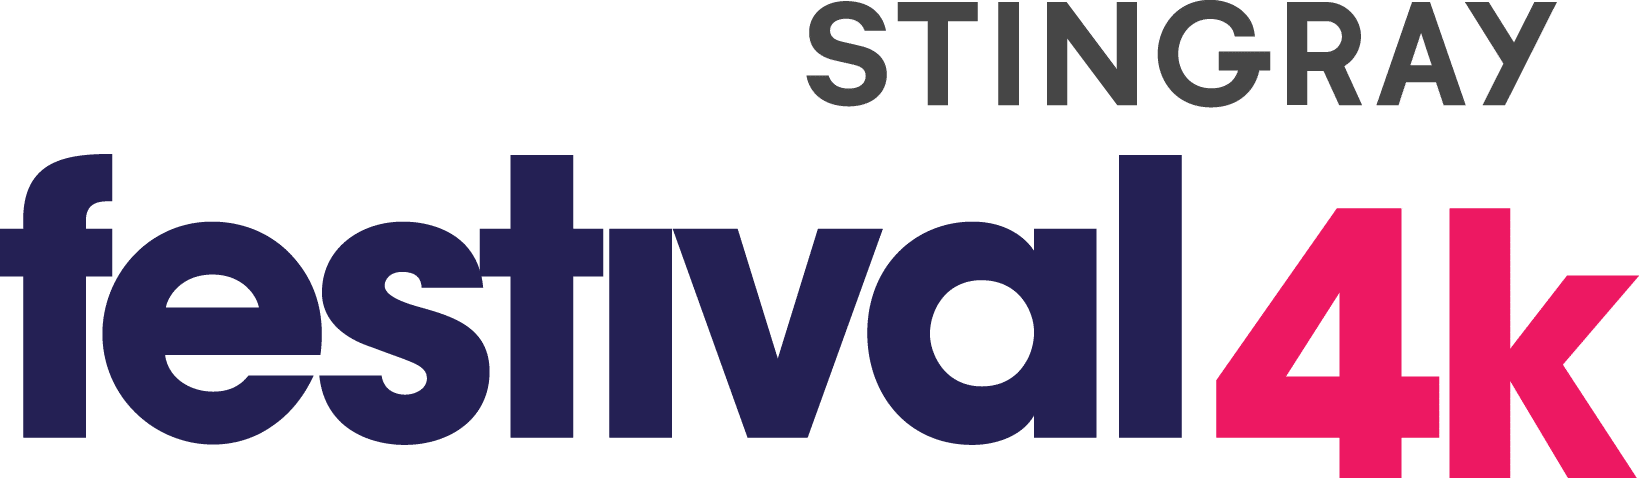 Chaine TV Stingray Festival 4K